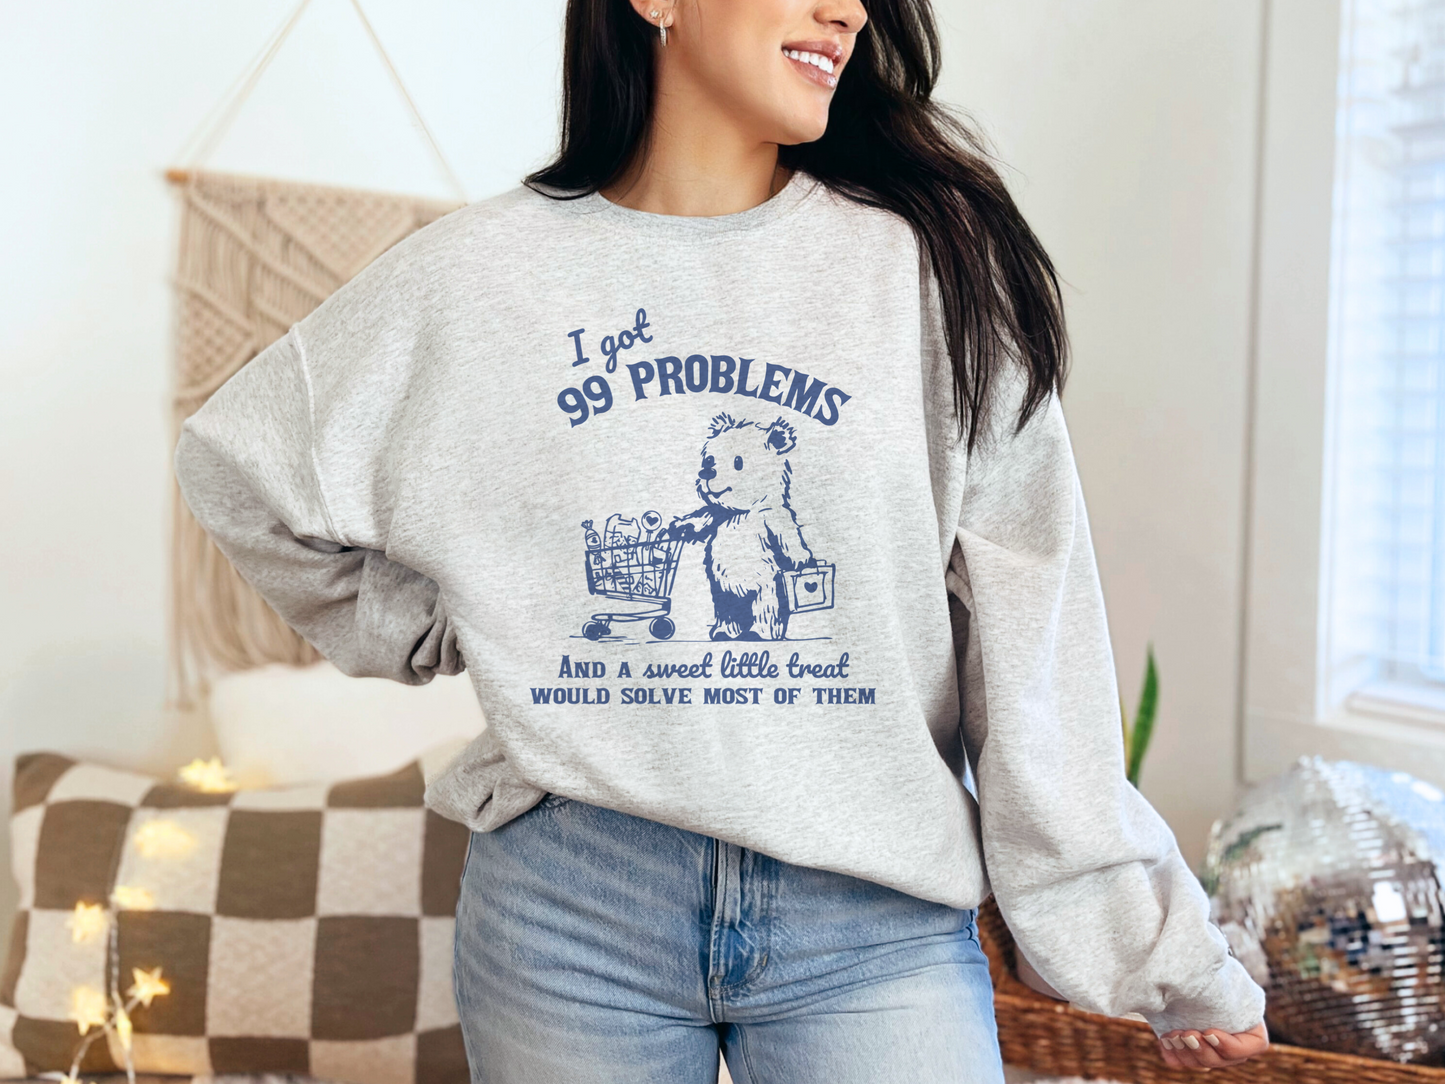 I Got 99 Problems Graphic T-Shirt or Sweatshirt